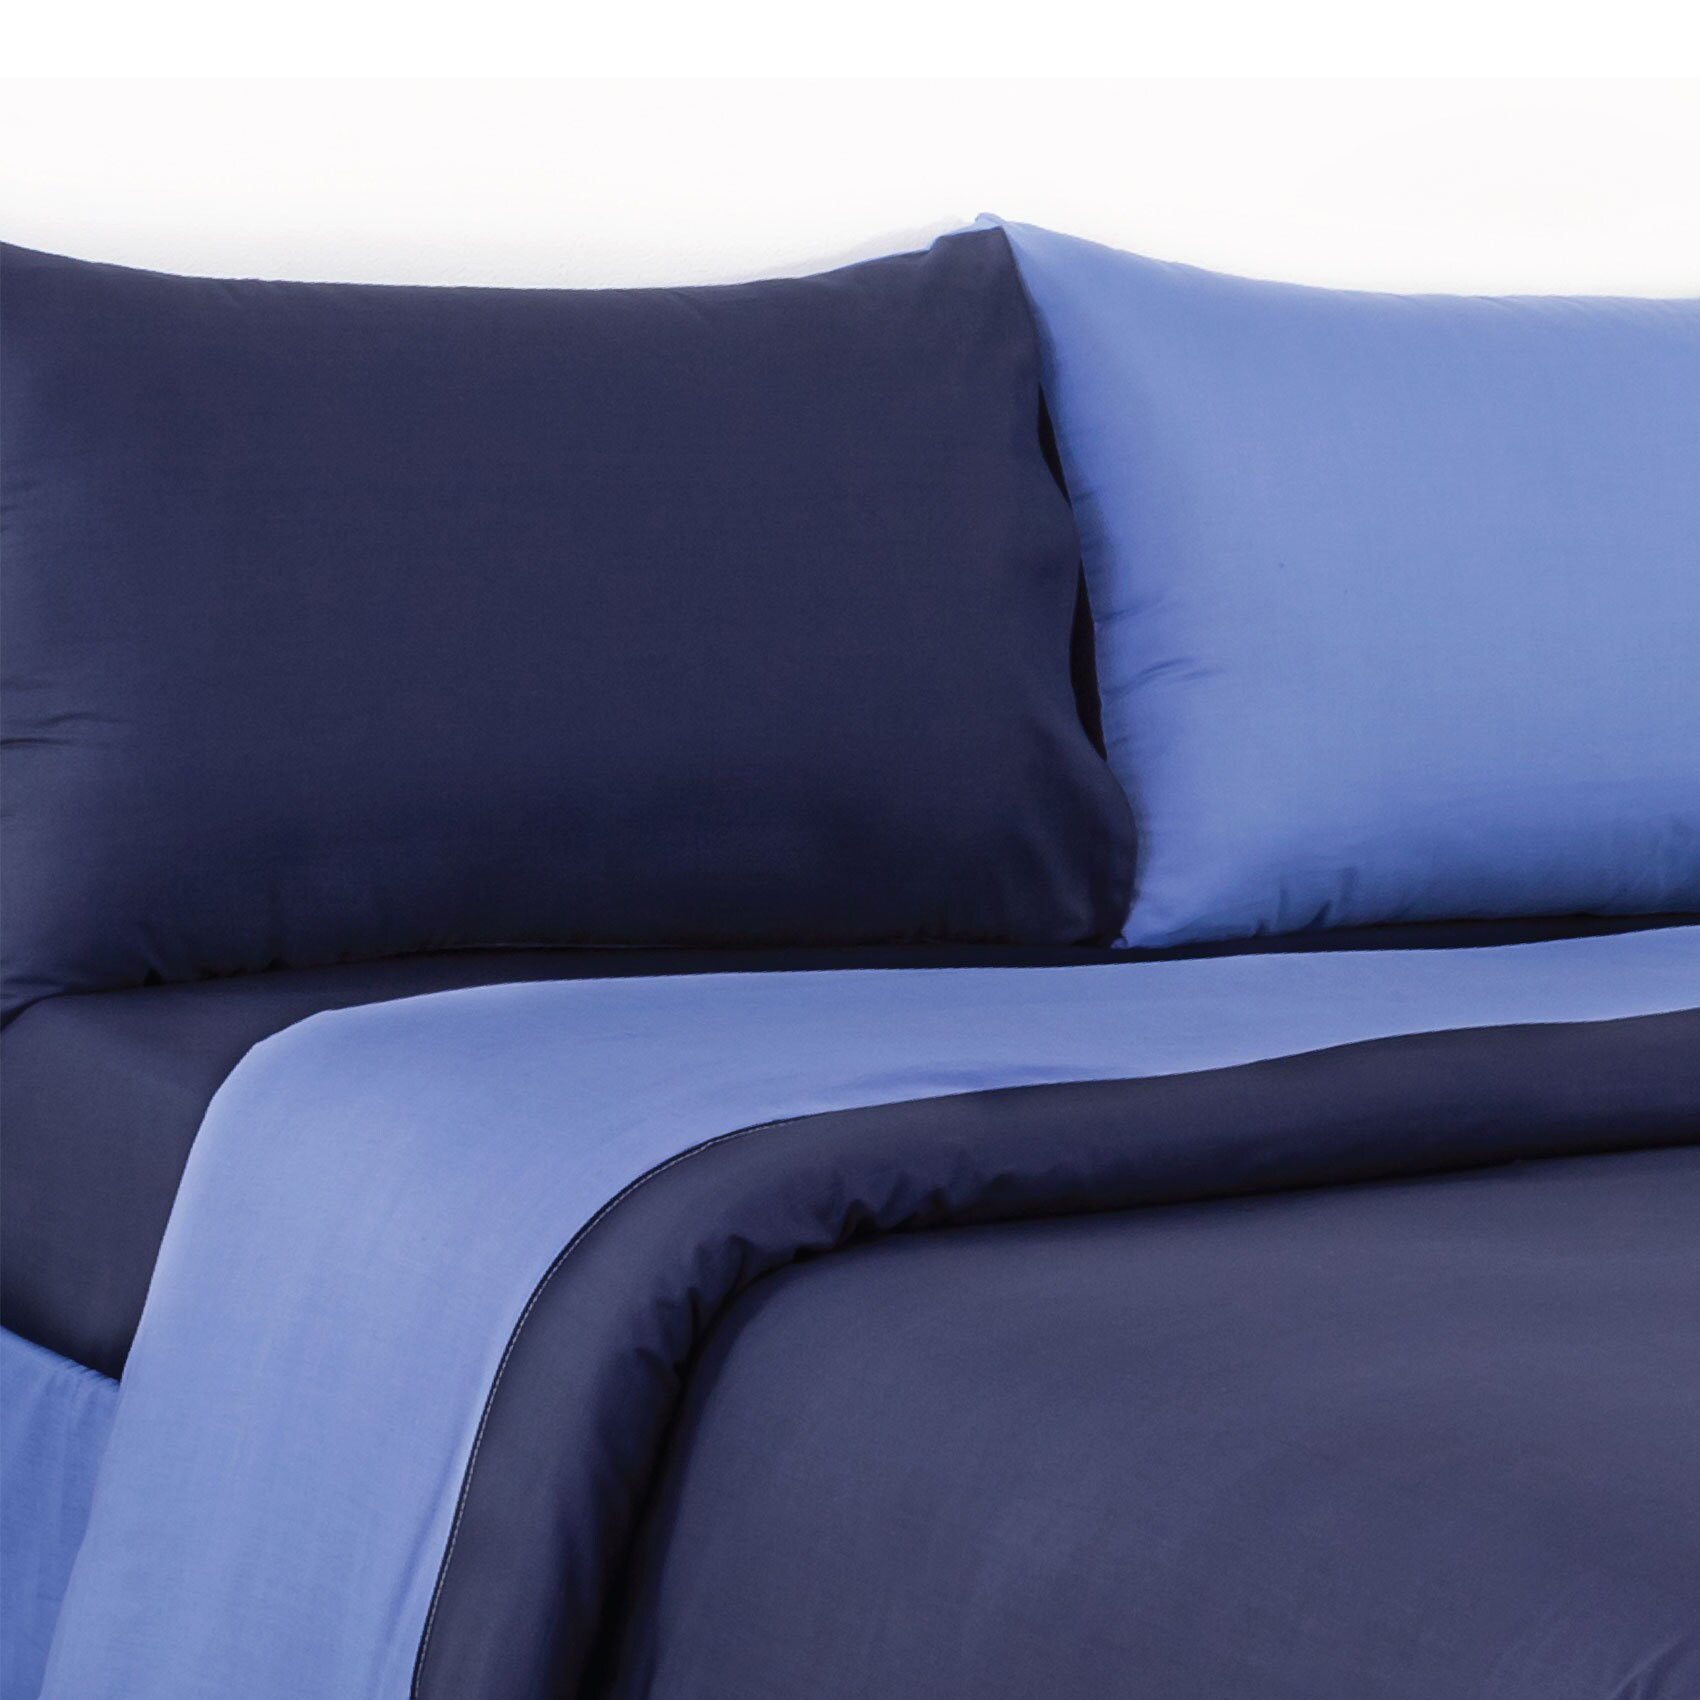 Buy Tendance Full Comforter 4pc Set Light Blue Dark Blue Online Shop Home And Garden On Carrefour Uae